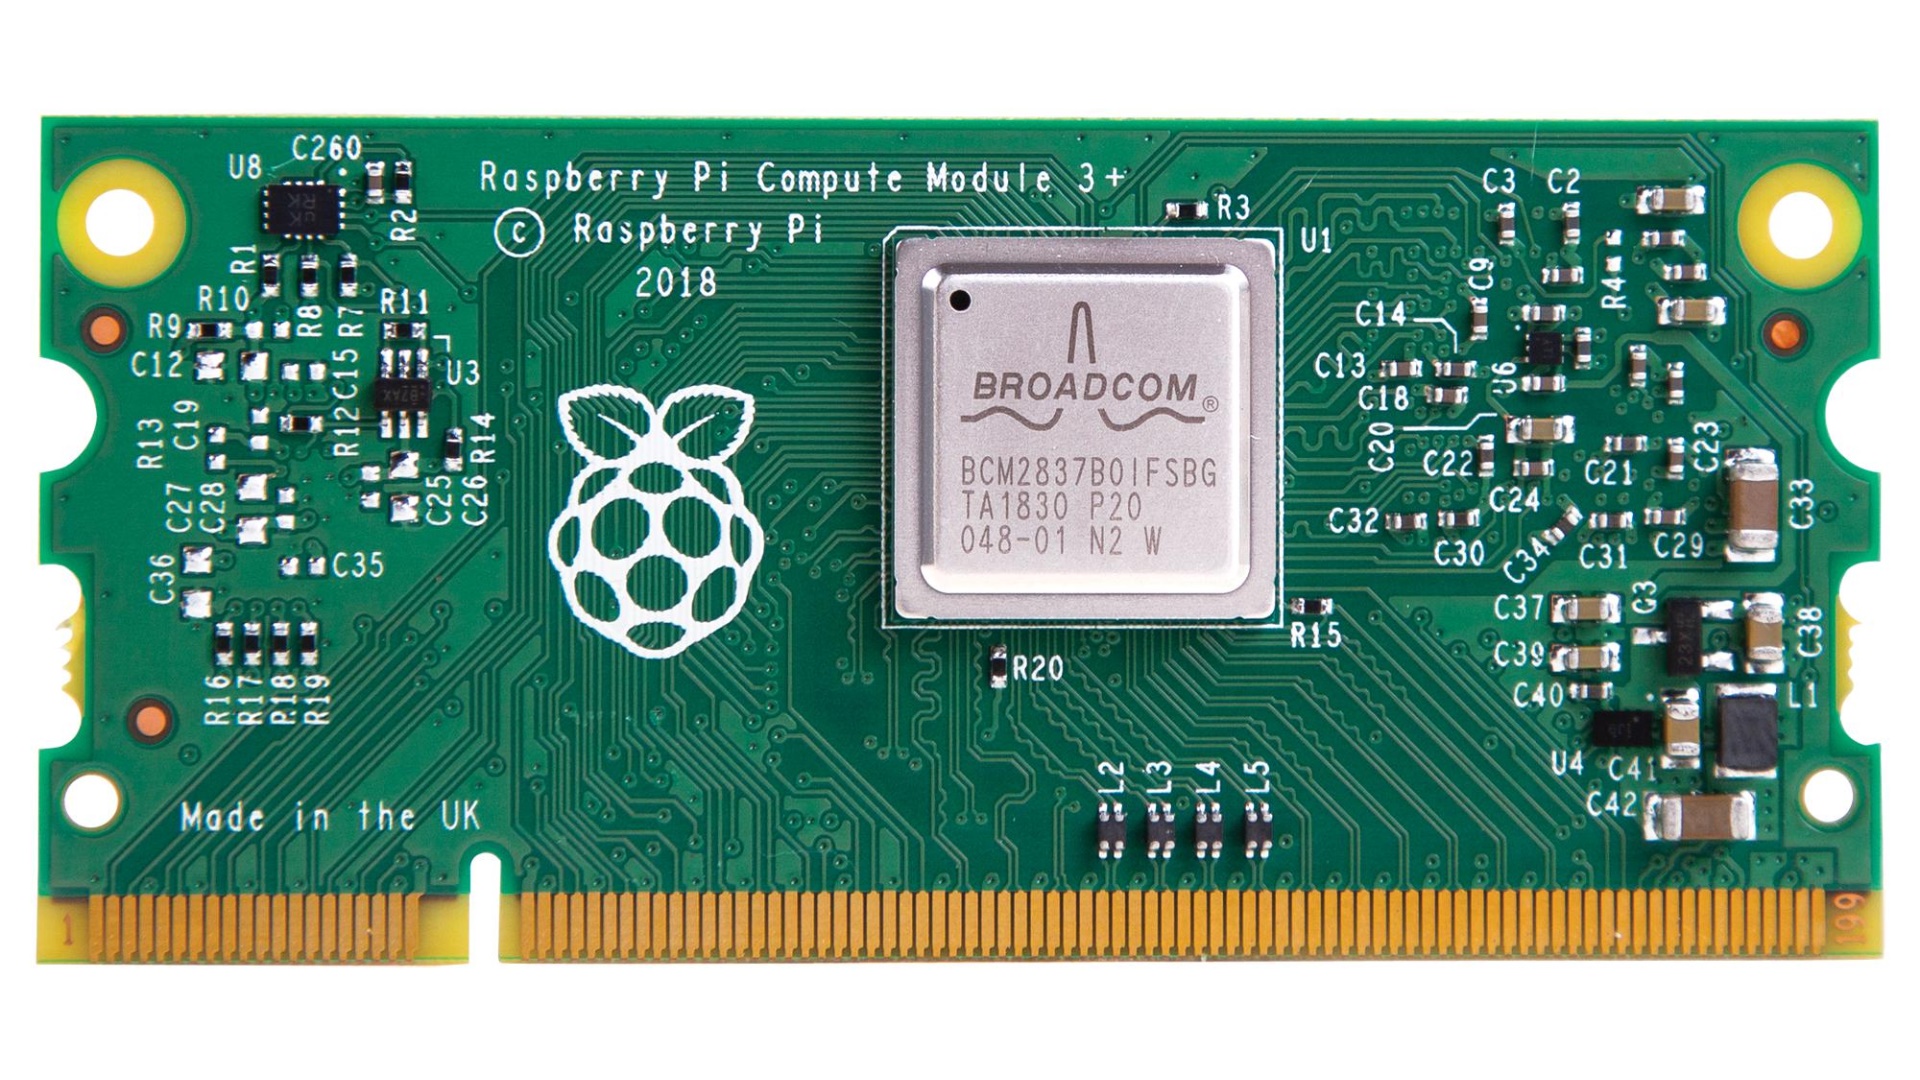 Raspberry Pi Compute Module CM3